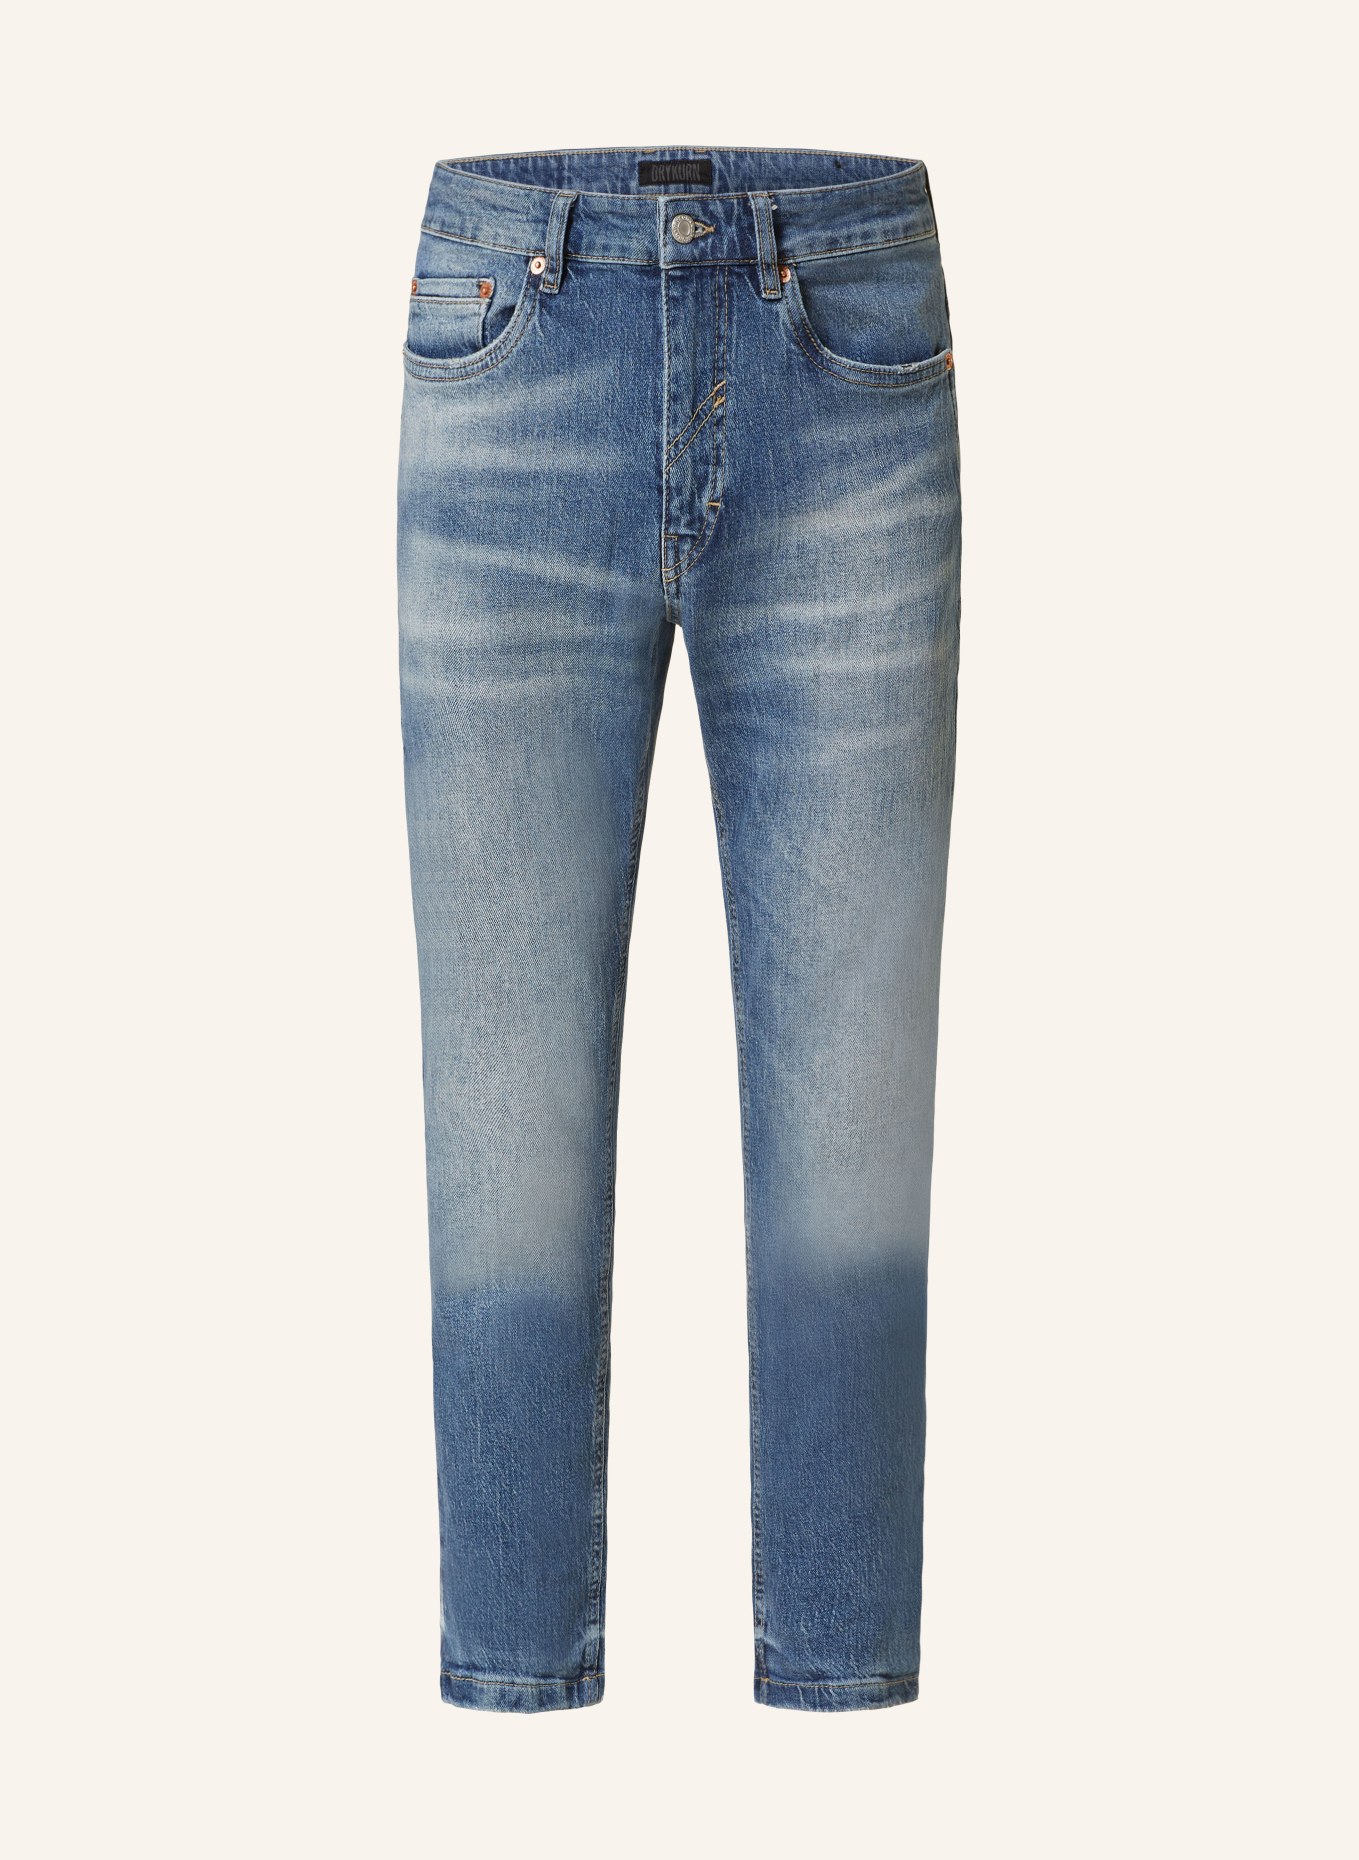 DRYKORN Jeans WEST Slim Fit, Farbe: 3600 blau (Bild 1)